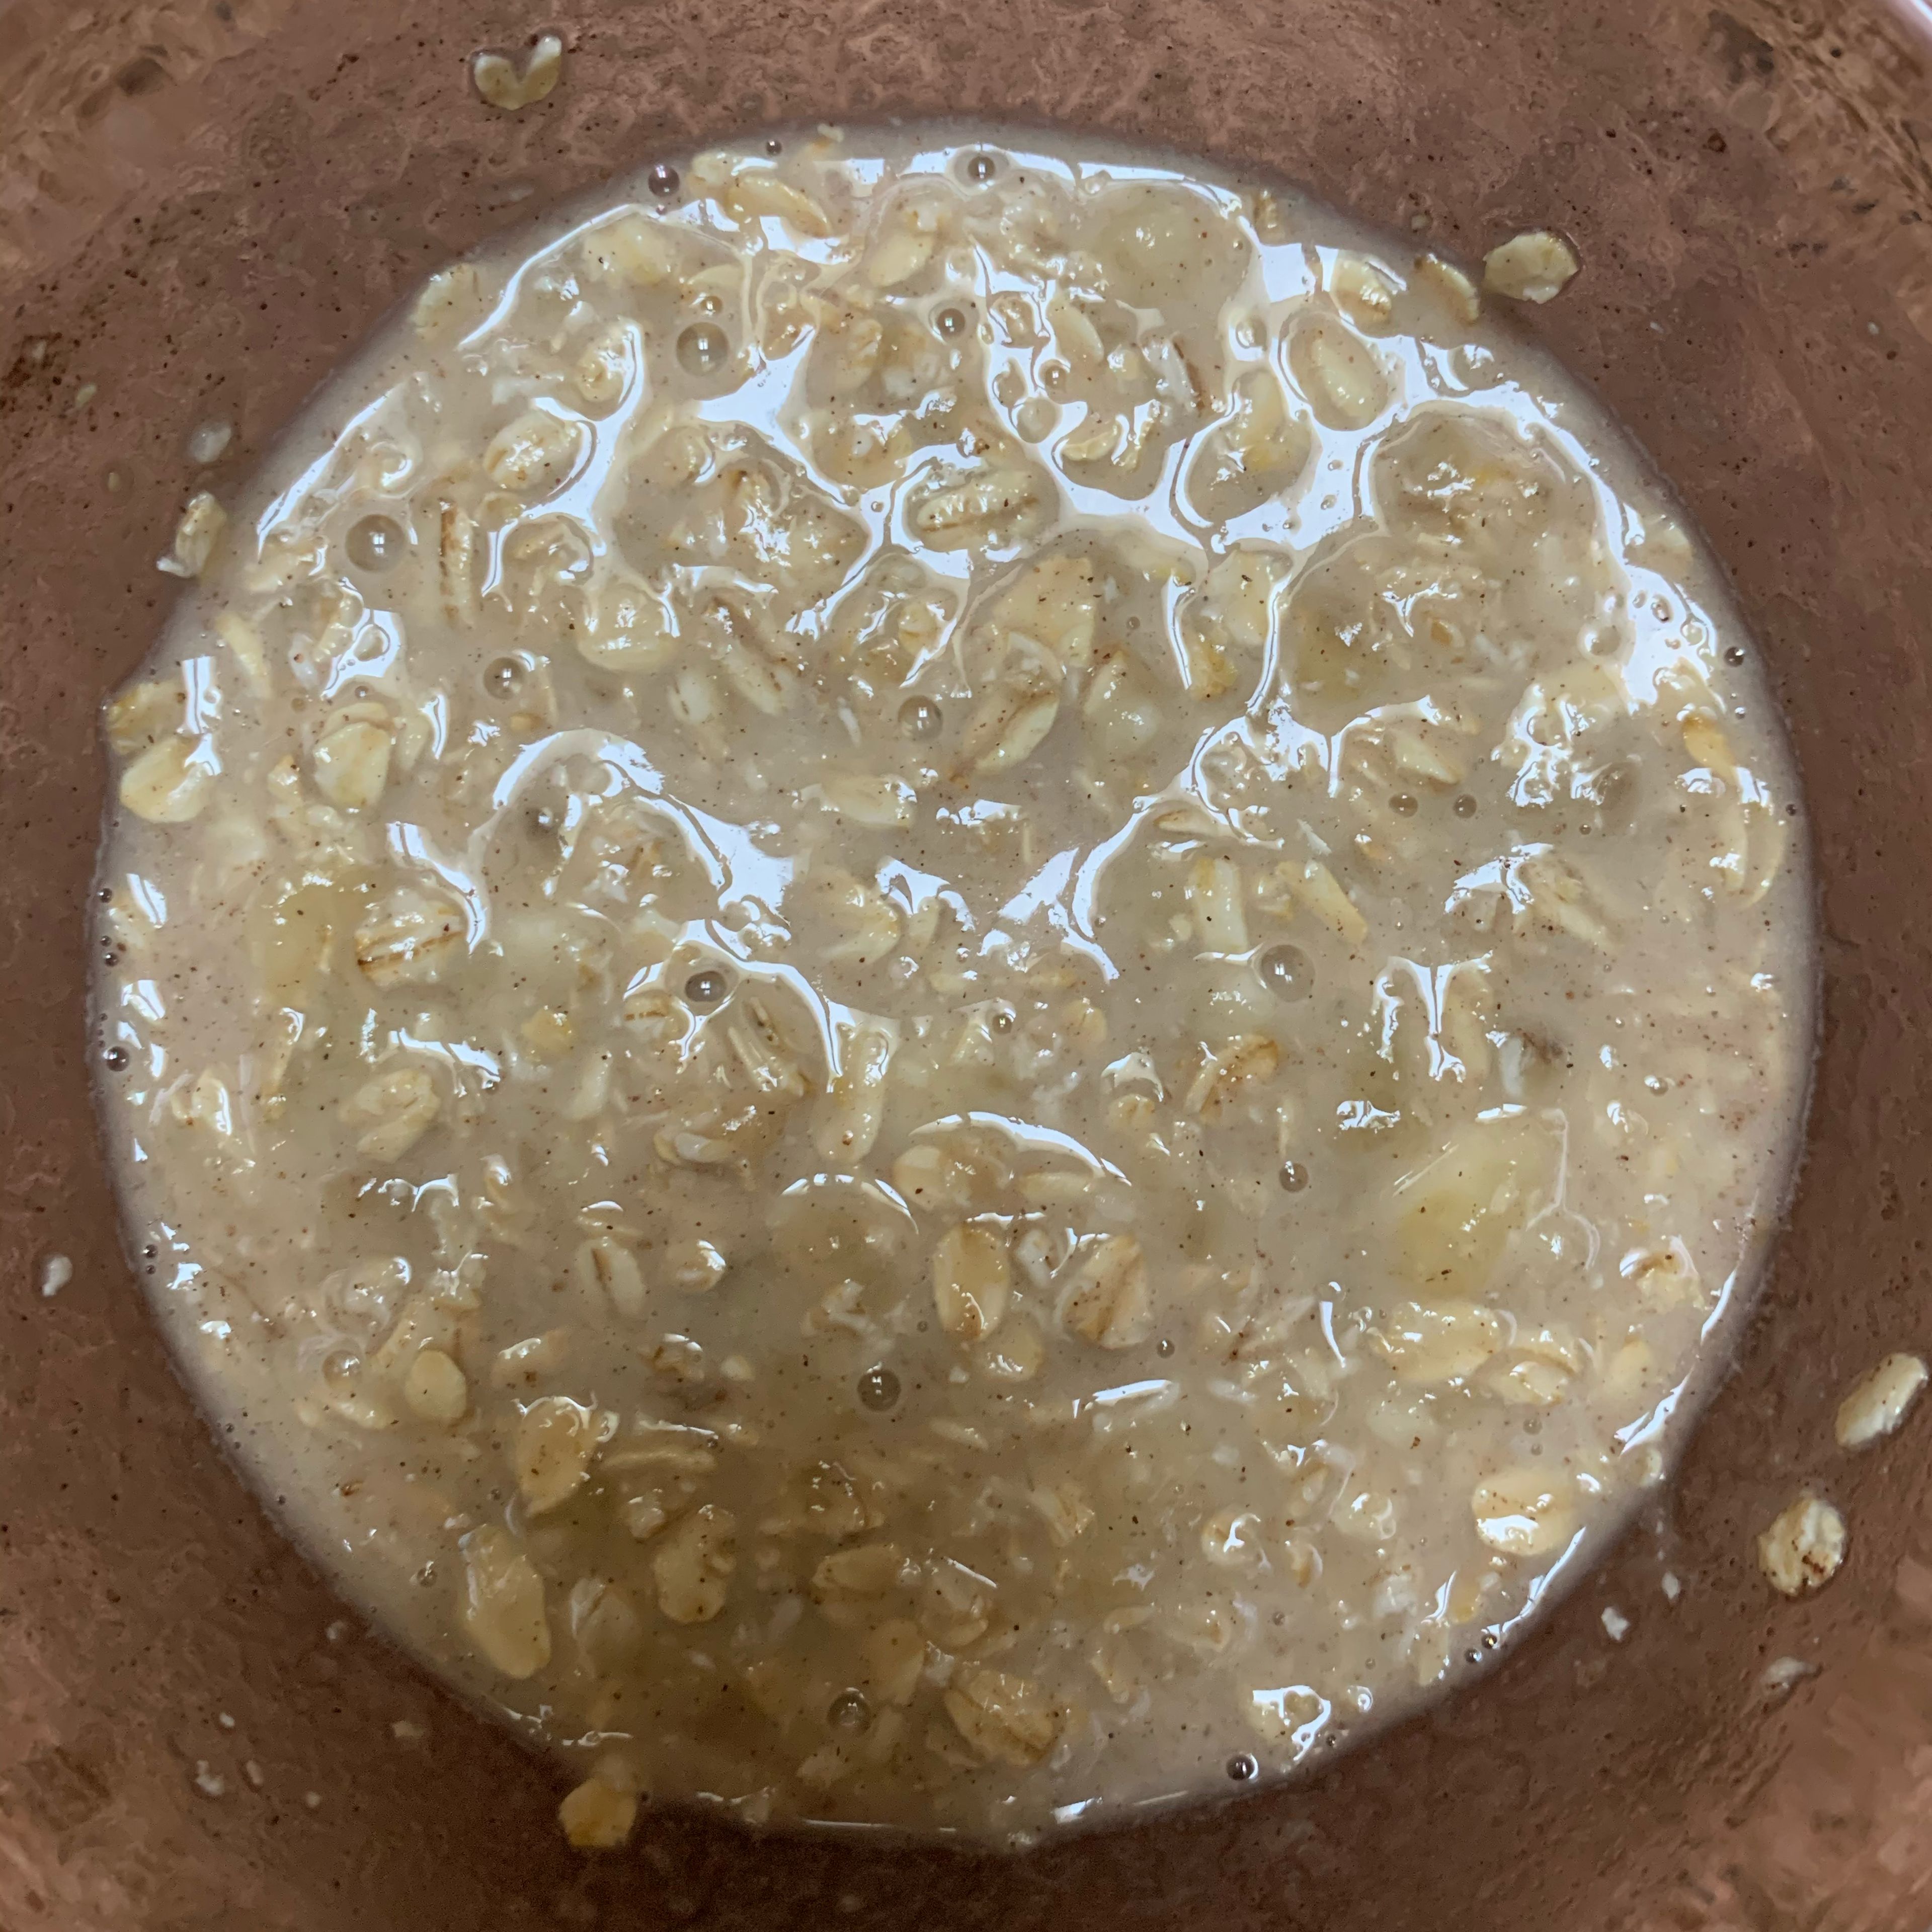 in a small/medium bowl, combine oats, banana, water, vanilla, and salt